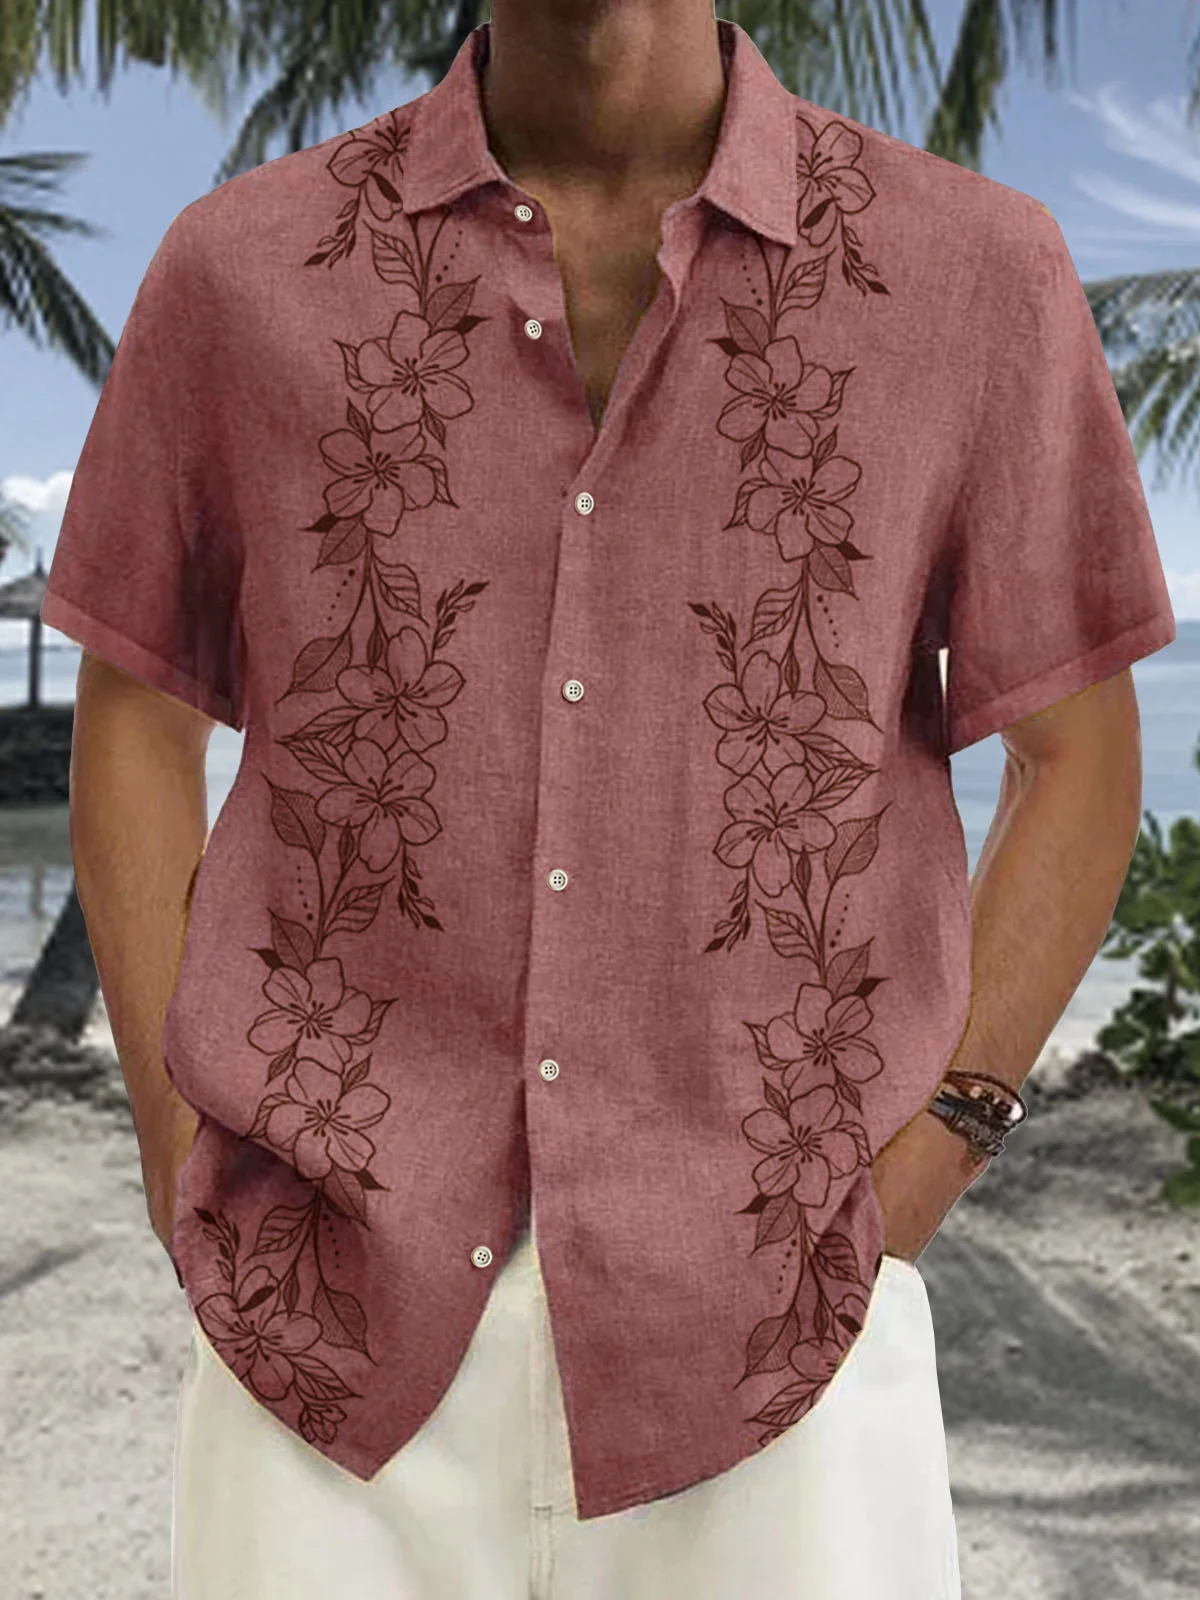 Royaura Beach Holiday Floral Men's Hawaiian Shirts Natural Fiber Oversized Button Down Aloha Camp Shirts